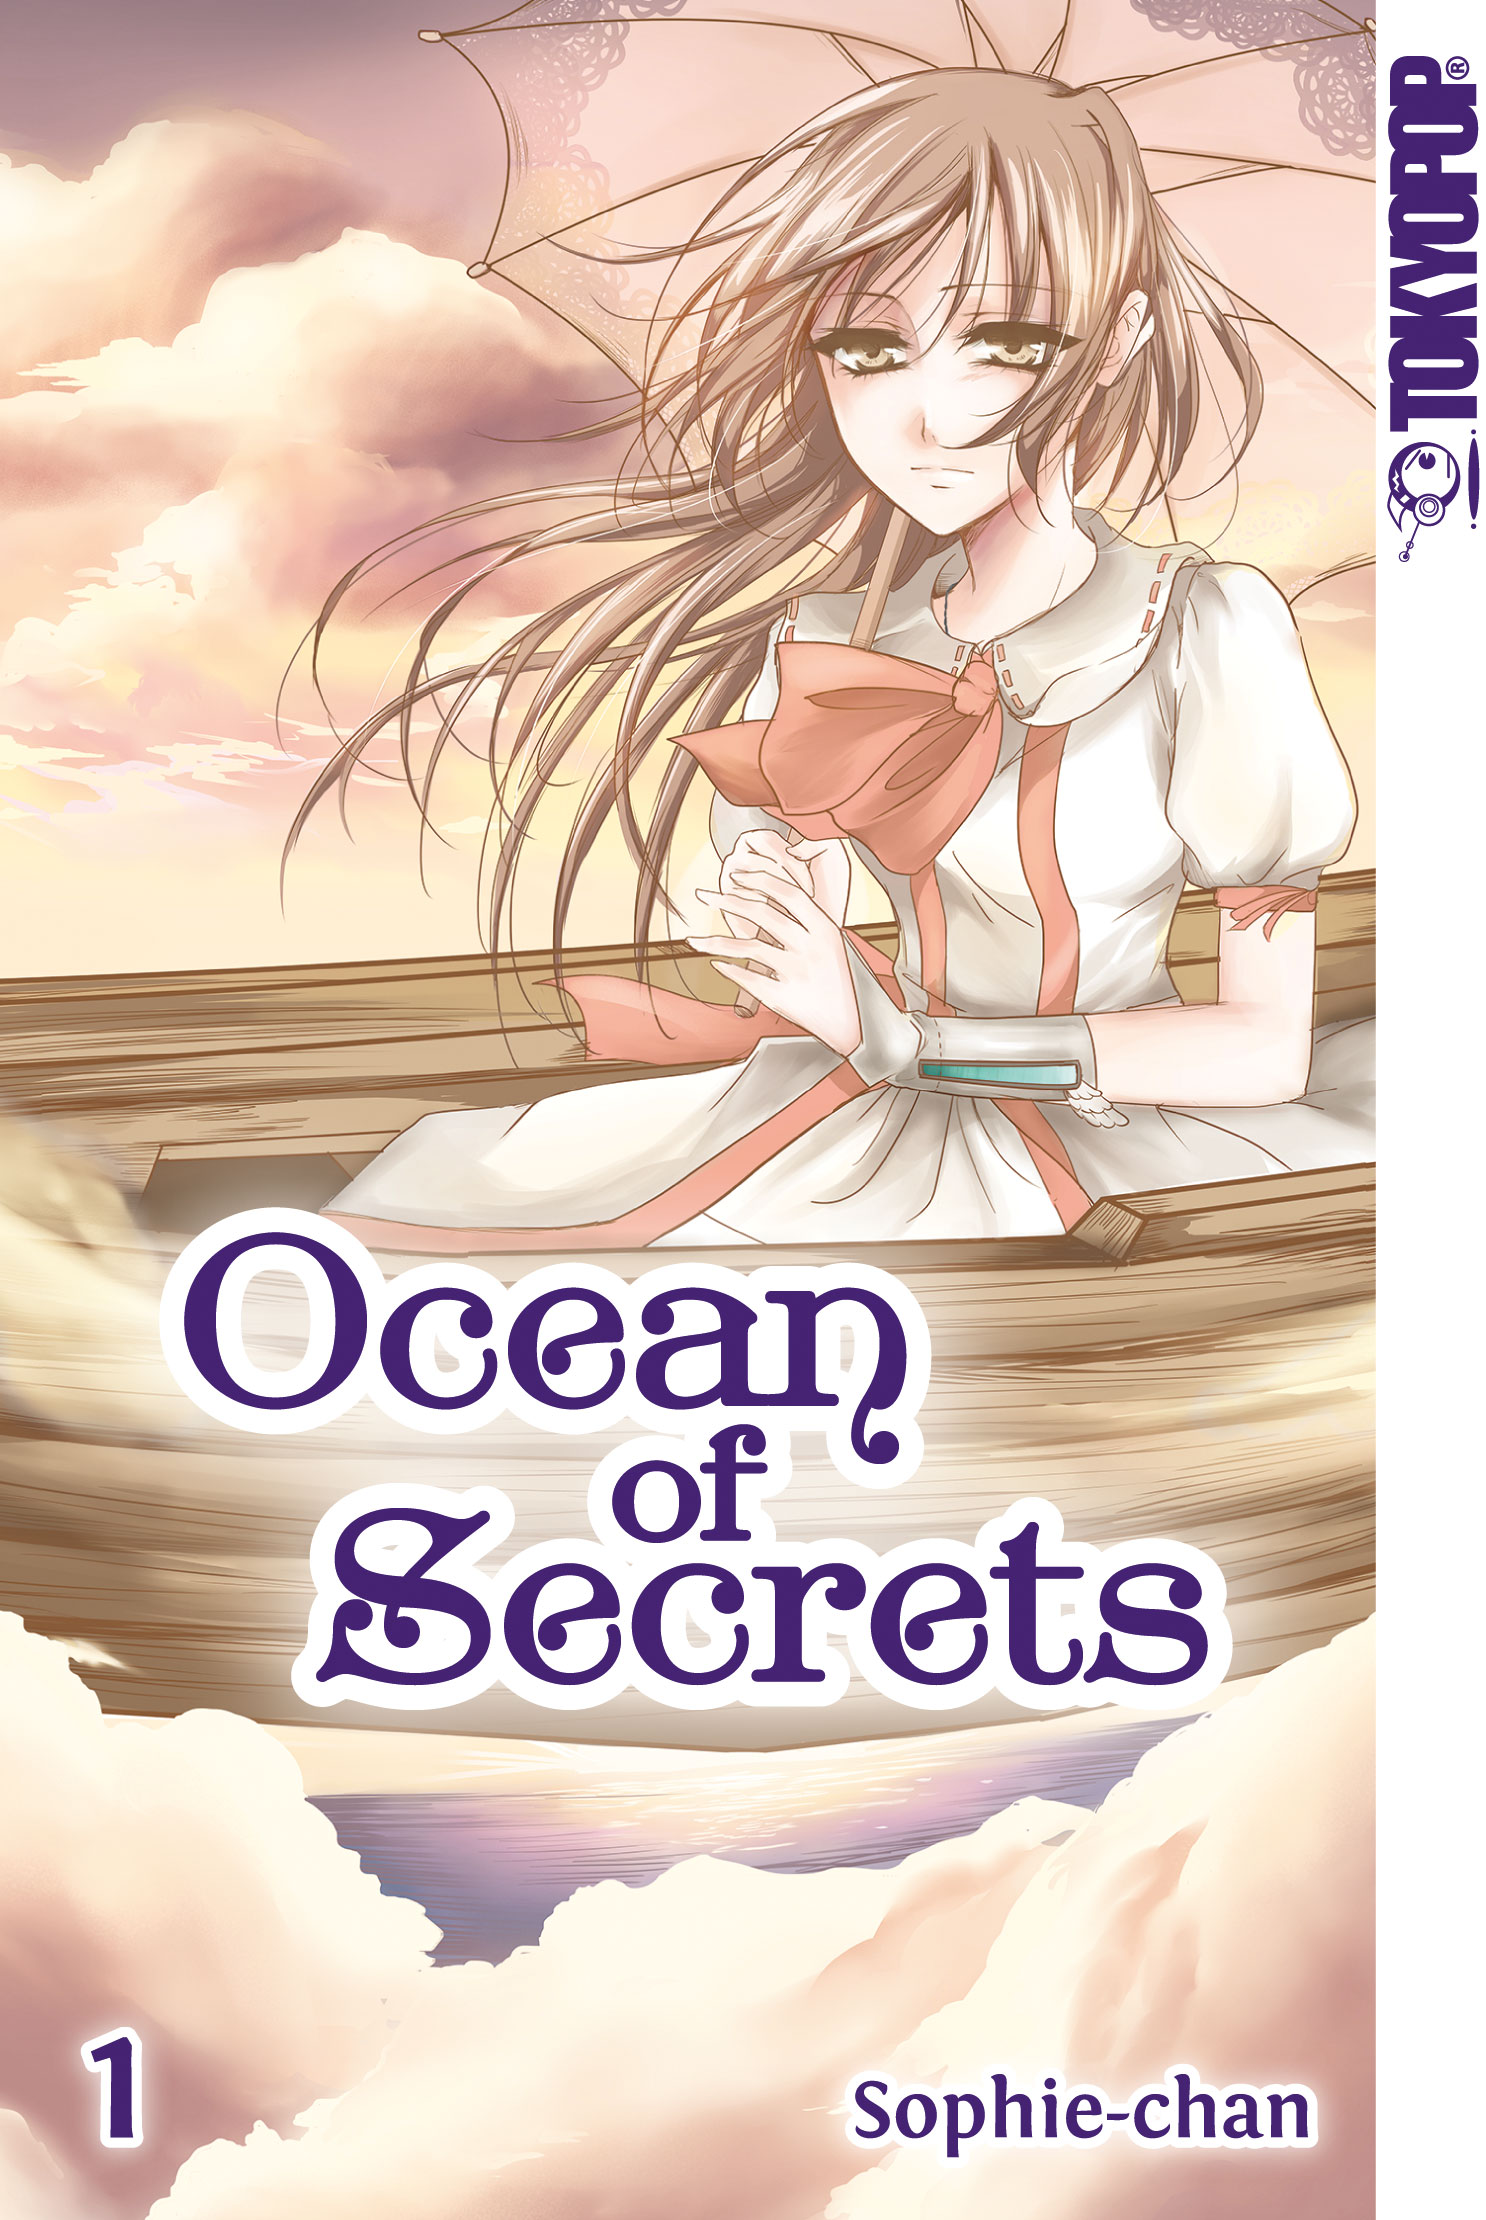 Ocean of Secrets